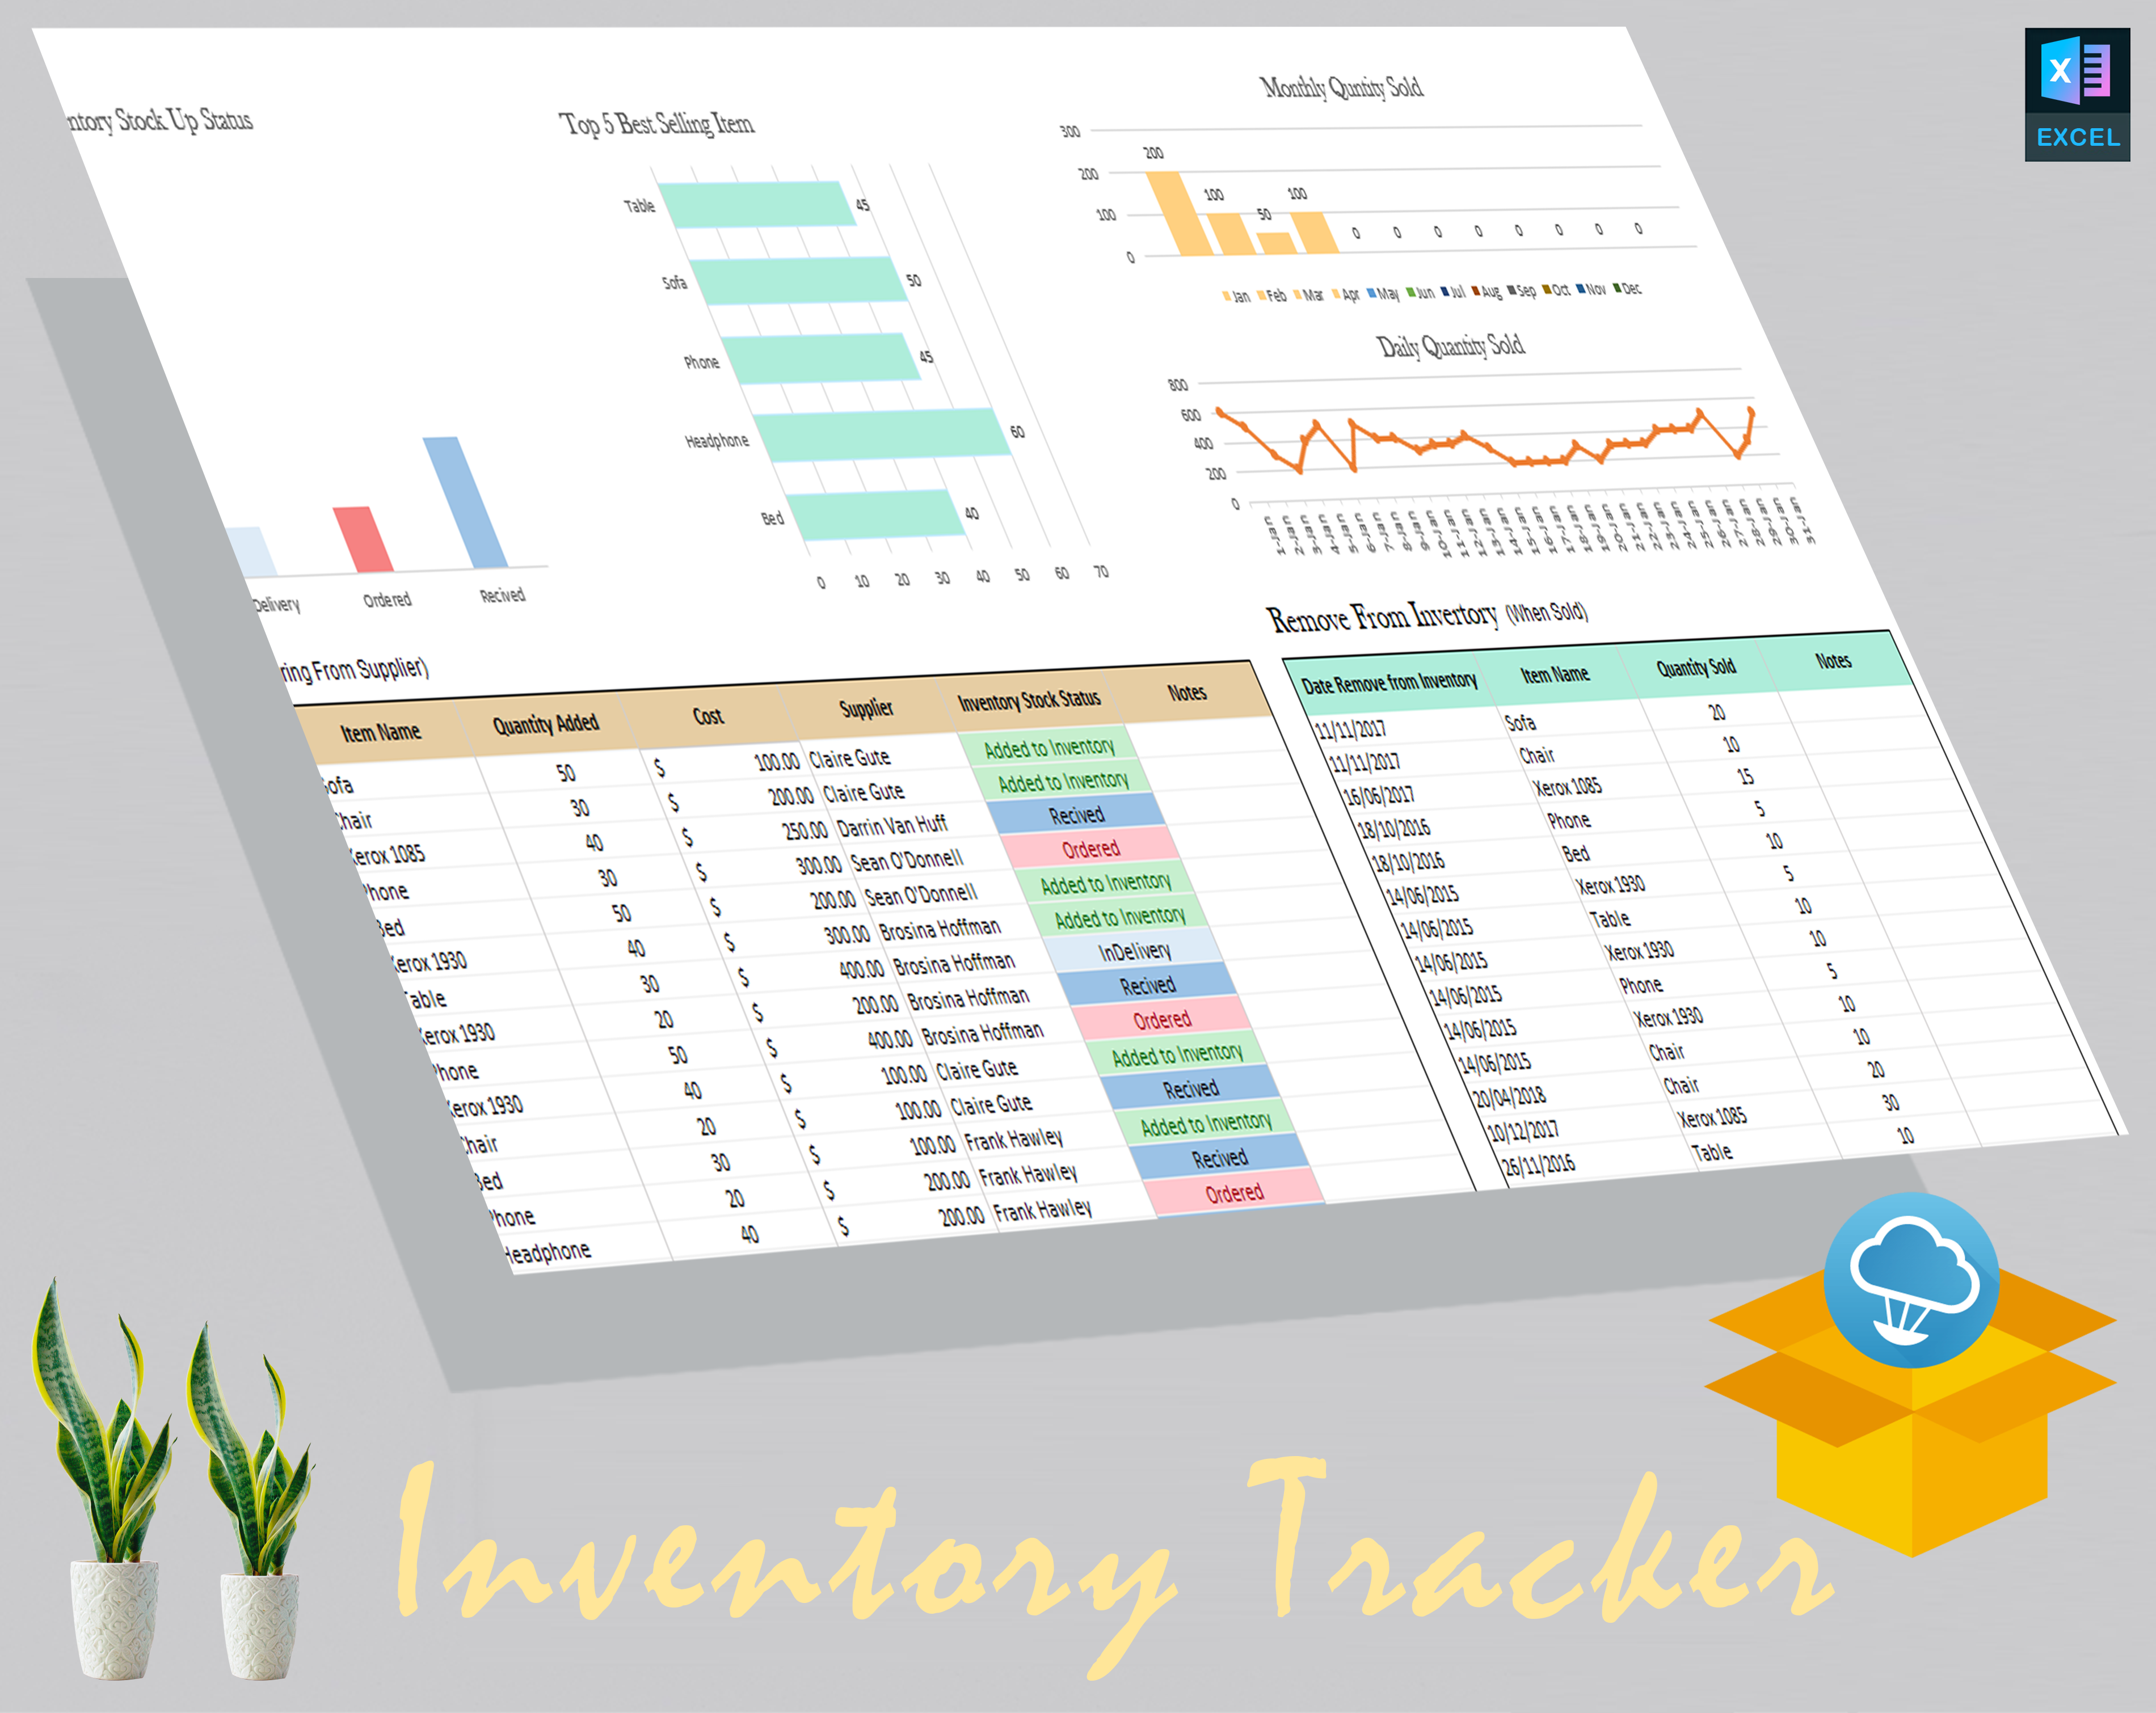 Inventory tracker